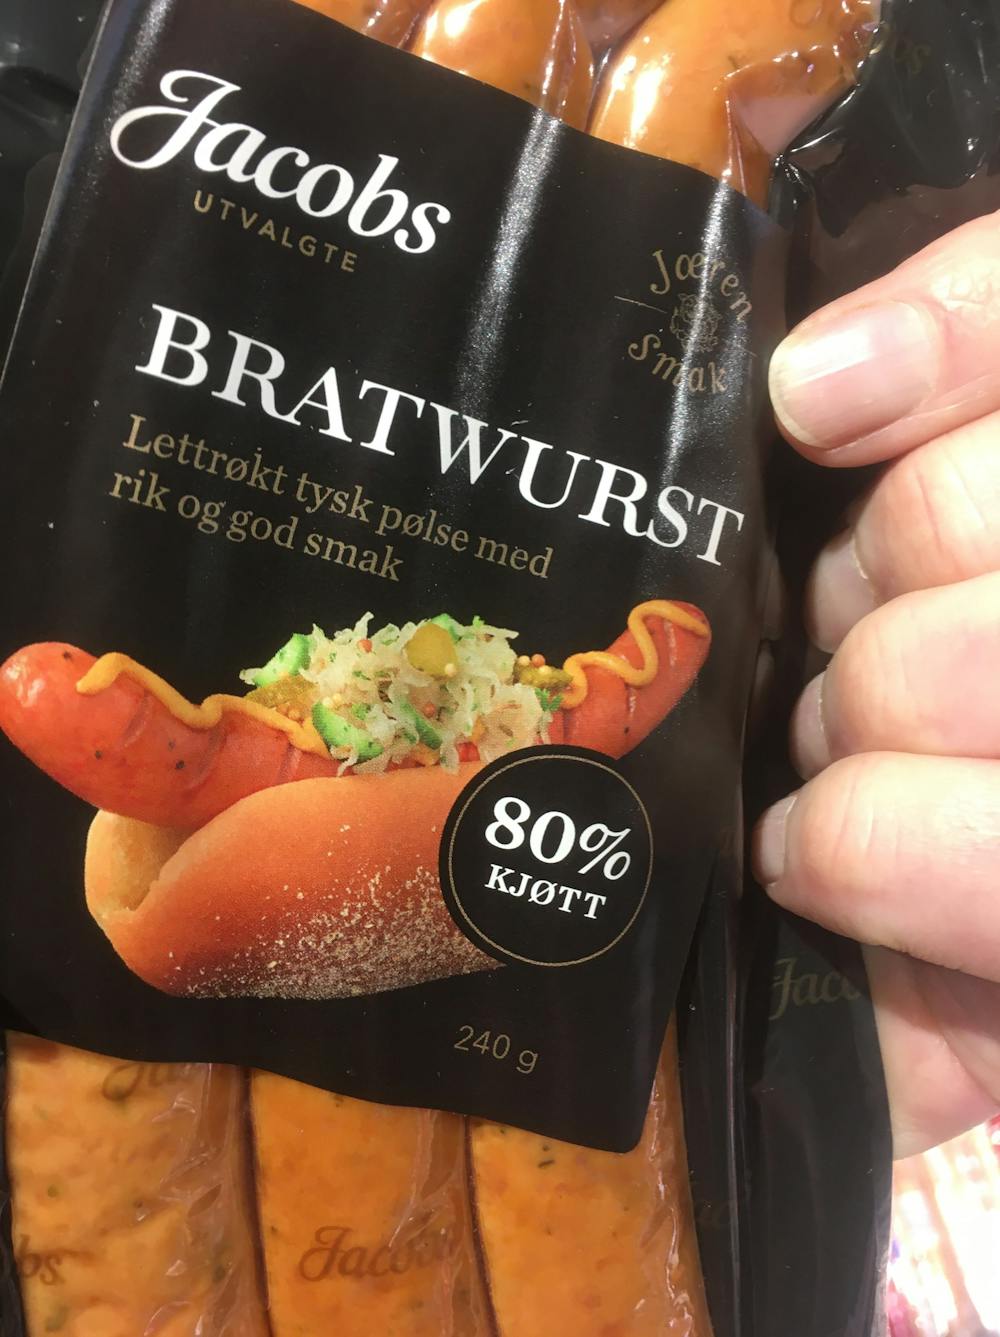 Bratwurst, Jacobs